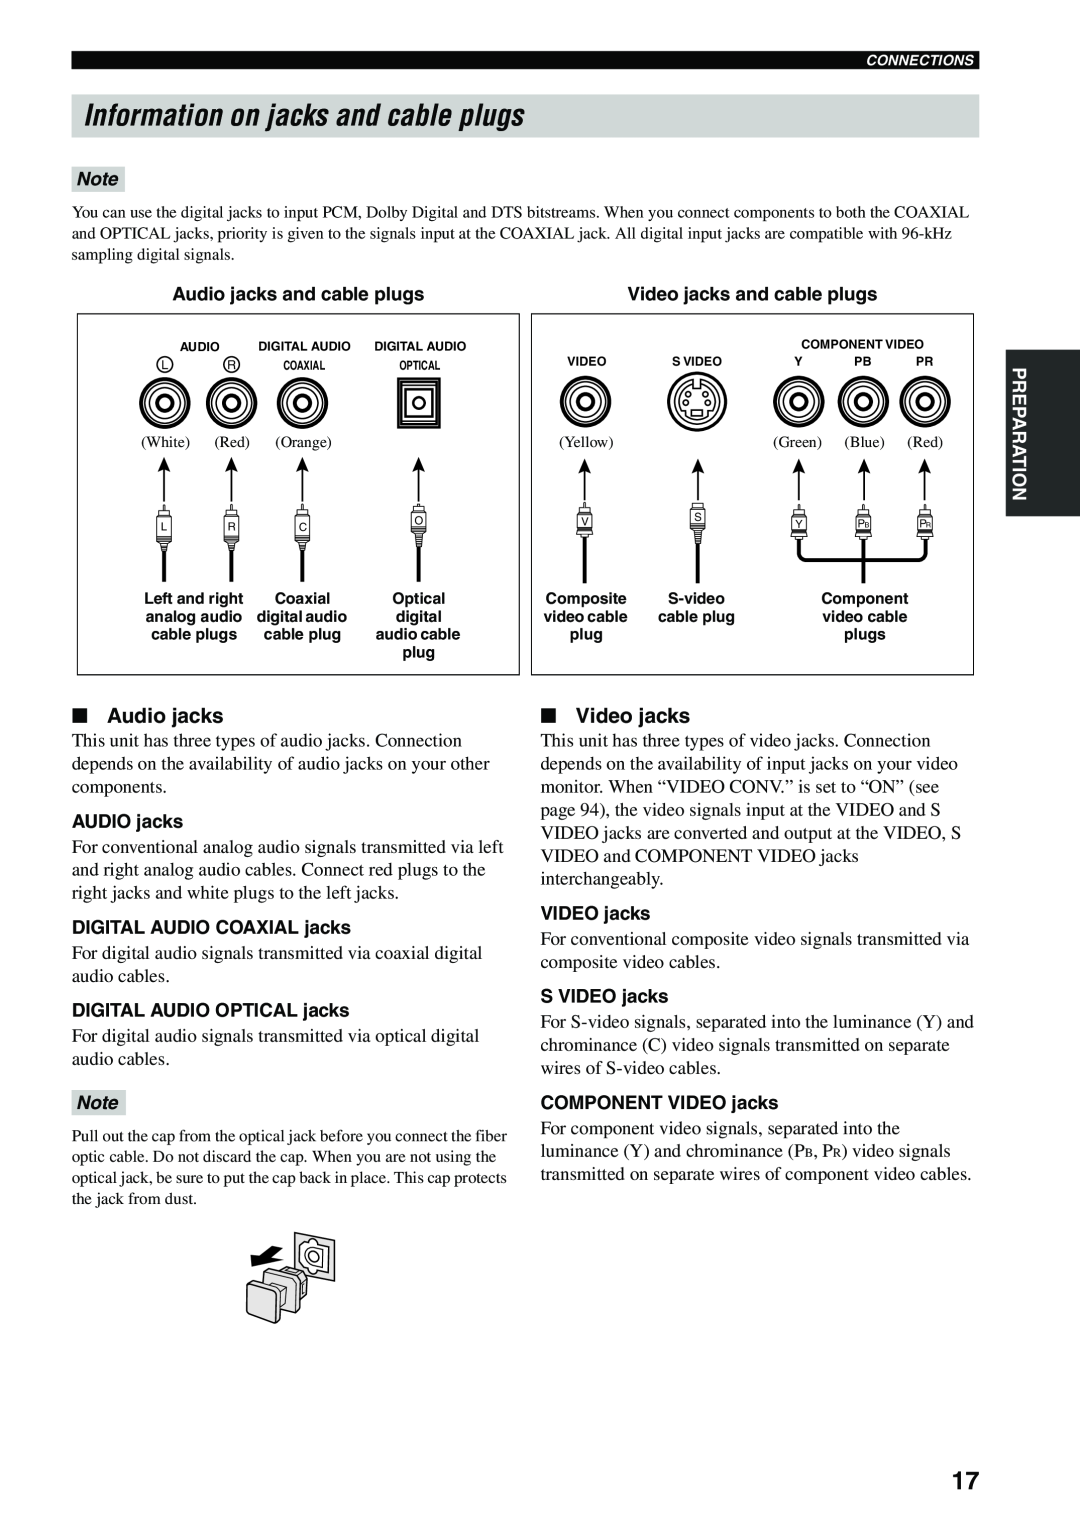 Yamaha HTR-5960 Information on jacks and cable plugs, Video jacks, Audio jacks and cable plugs, AUDIO jacks 